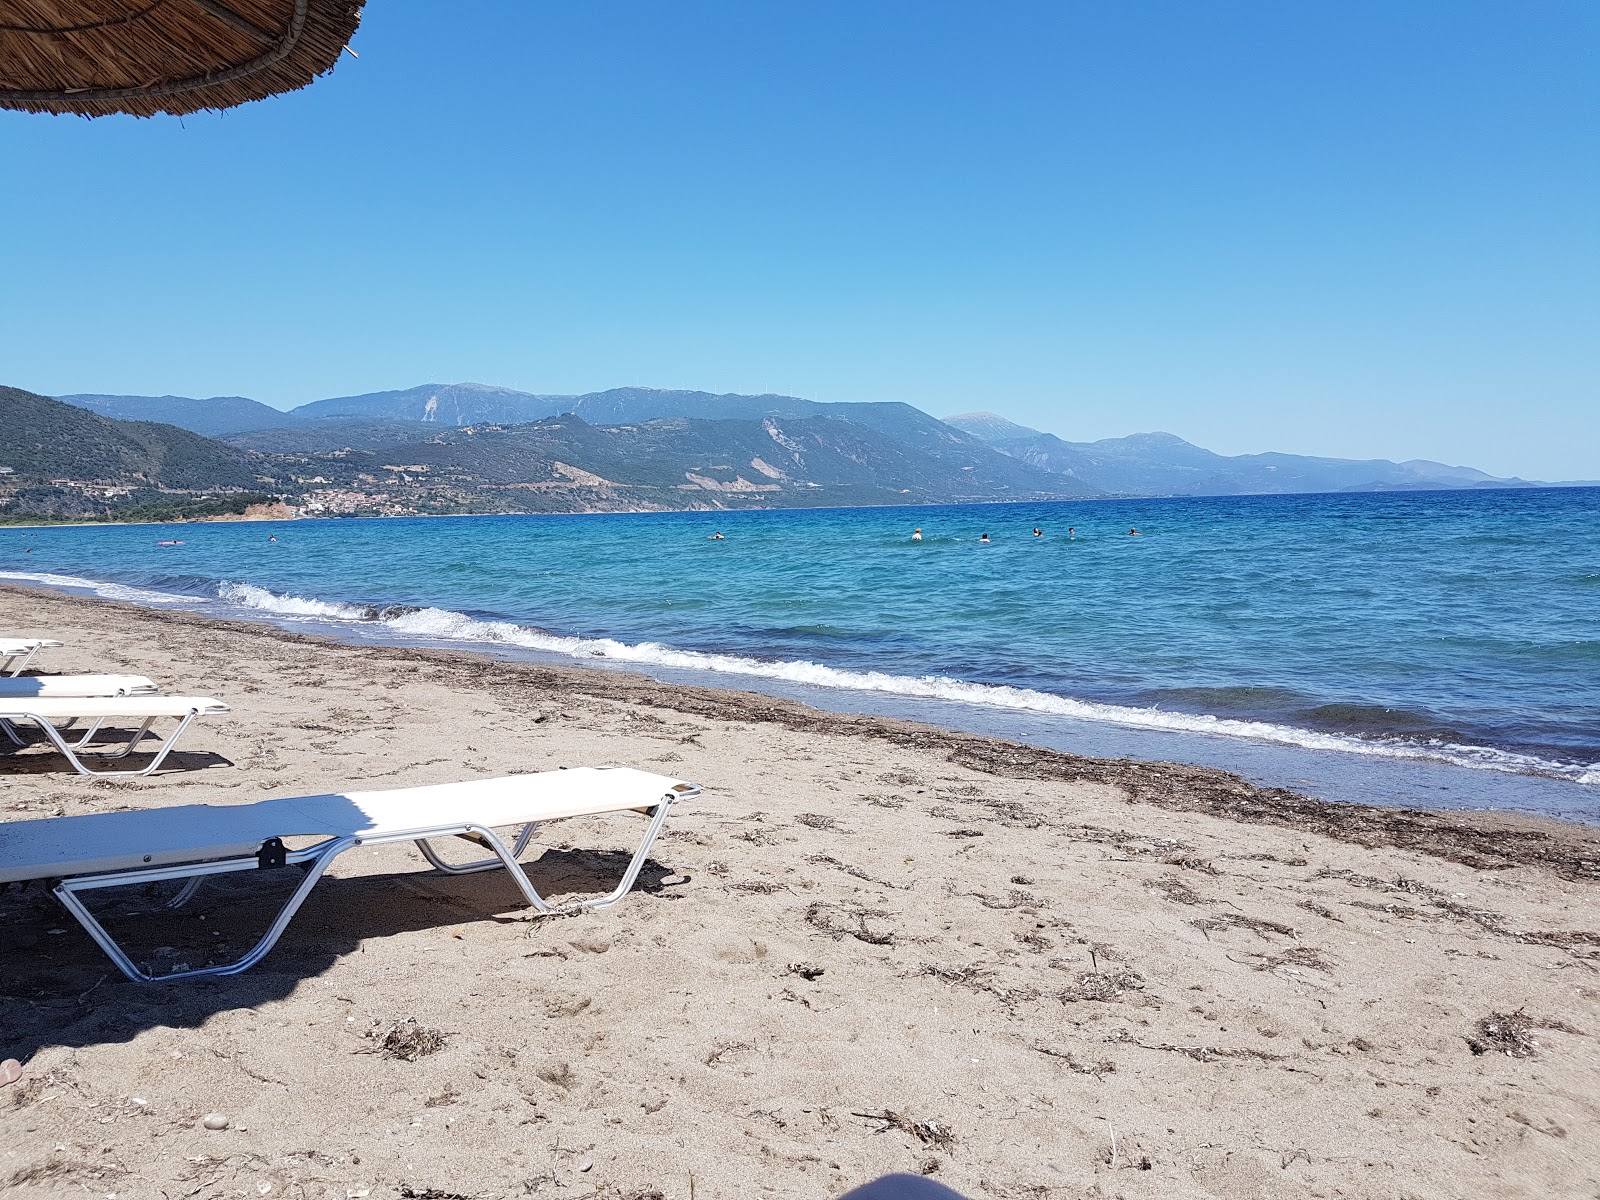 Fotografie cu Chiliadou beach - locul popular printre cunoscătorii de relaxare